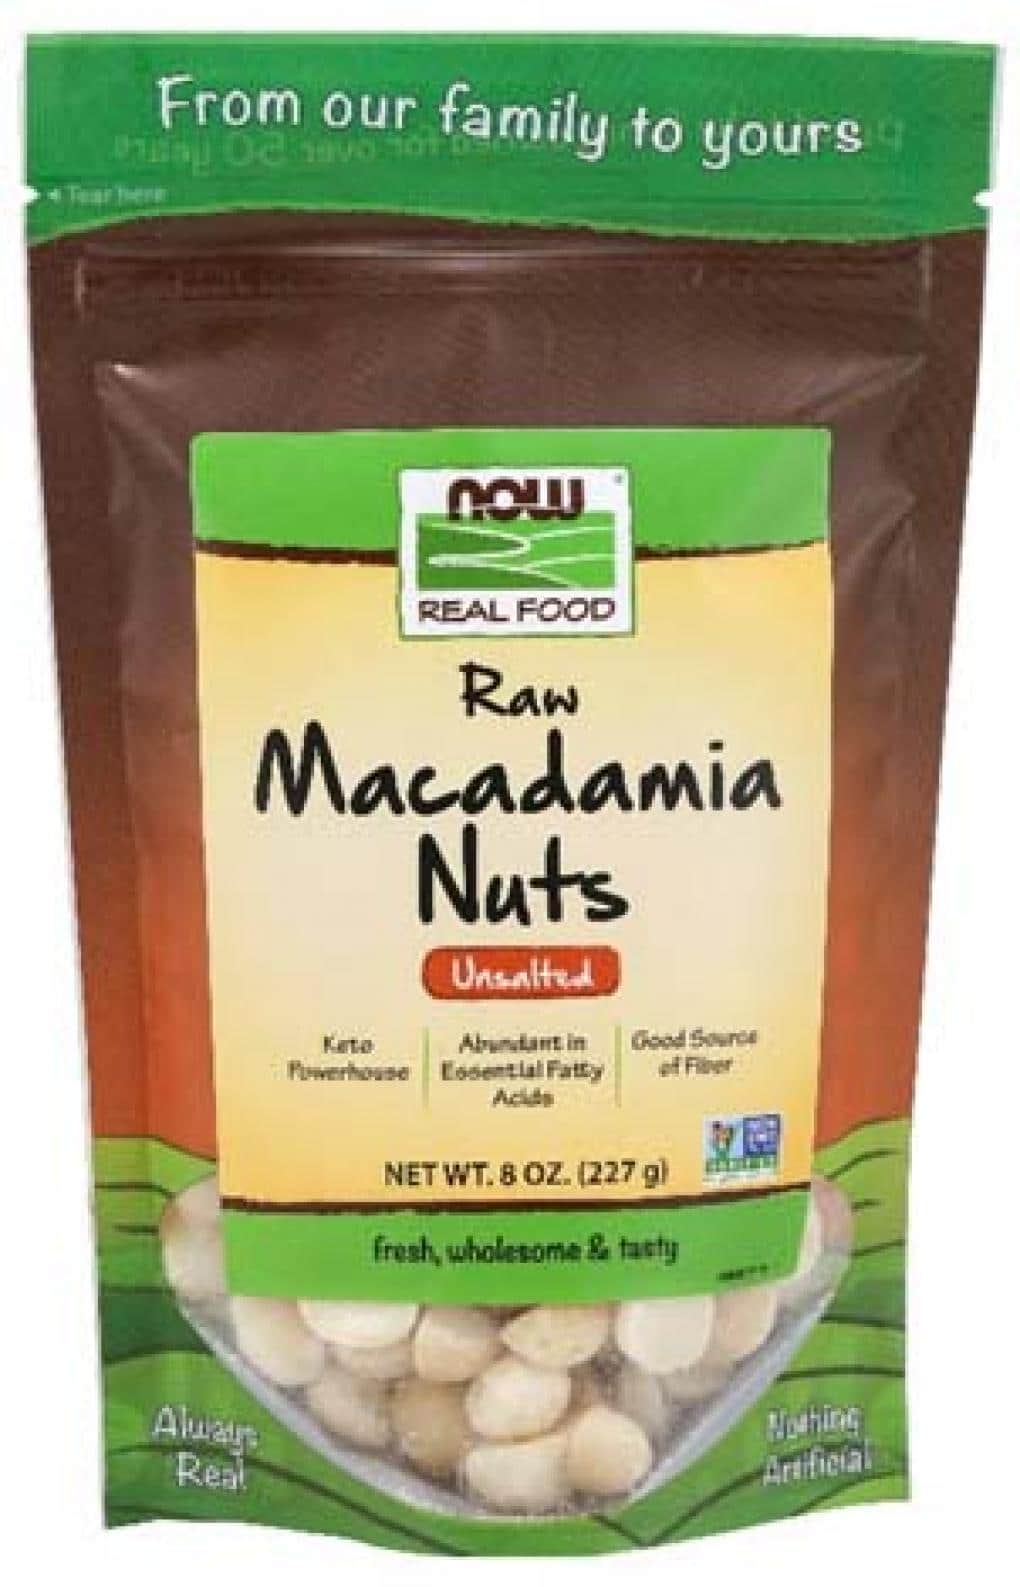 Raw Macadamia Nuts Recalled for Salmonella Risk